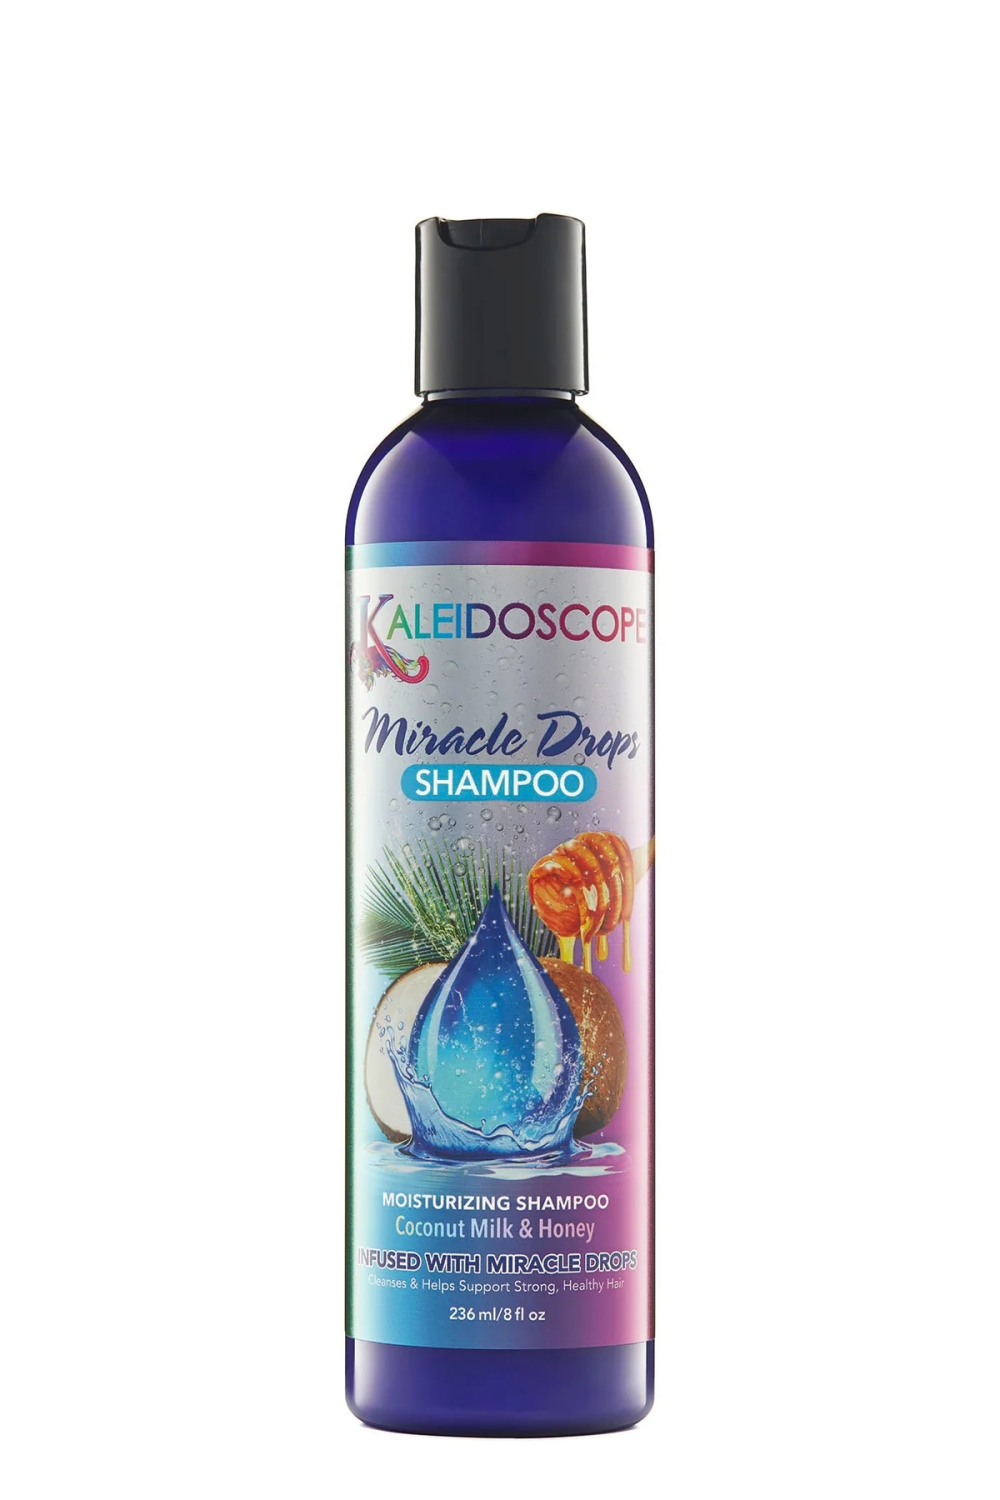 Kaleidoscope shampoo